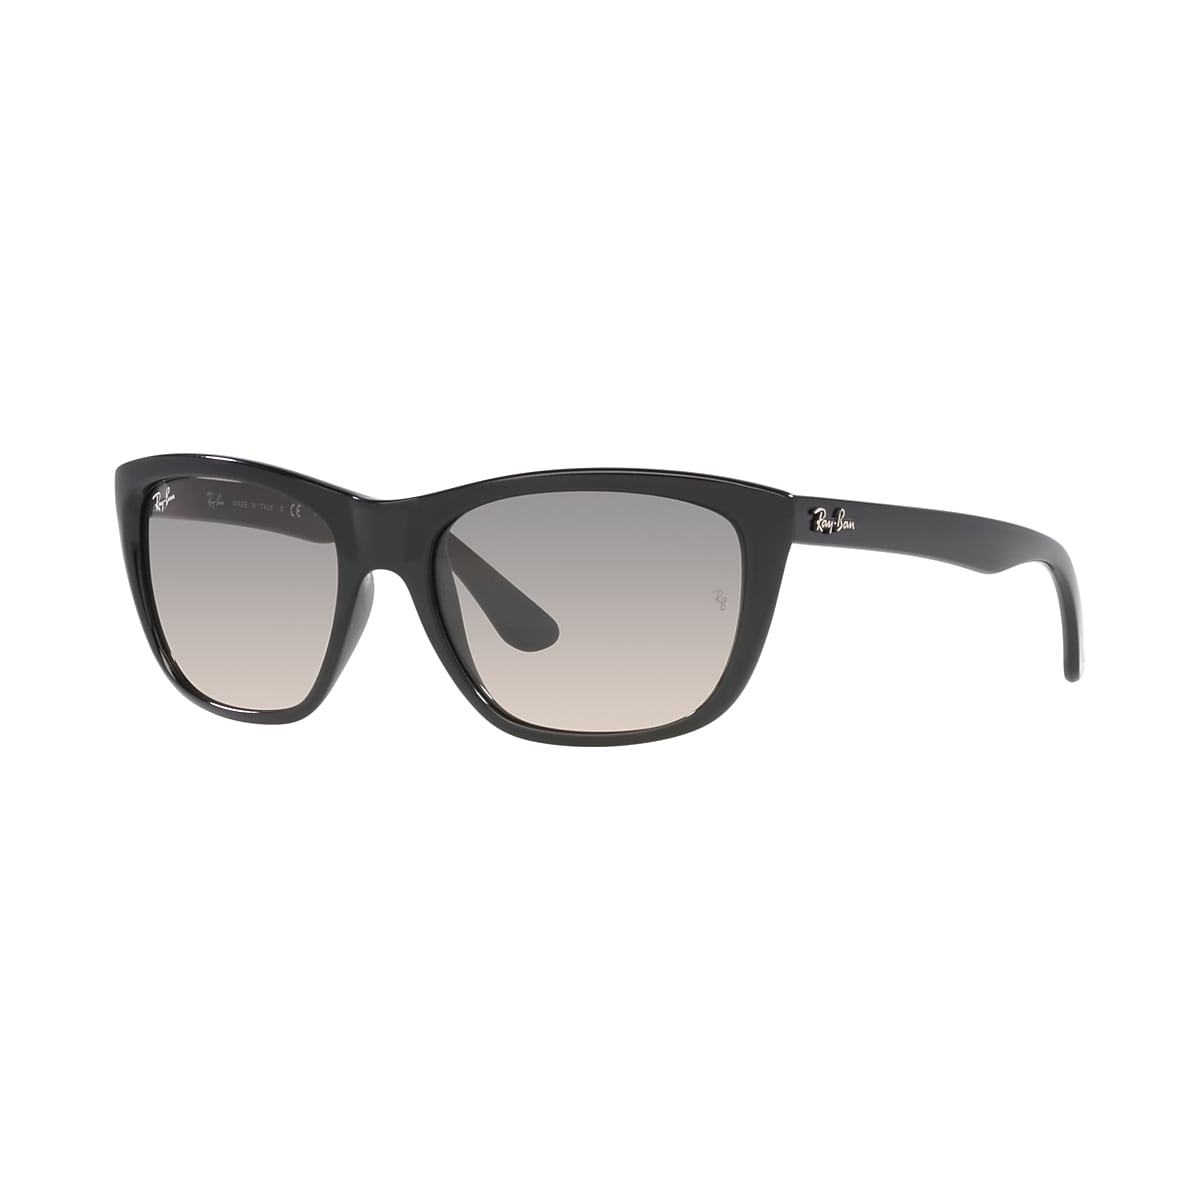 Ray-Ban RB4154 57 Grey & Black Sunglasses | Sunglass Hut Canada